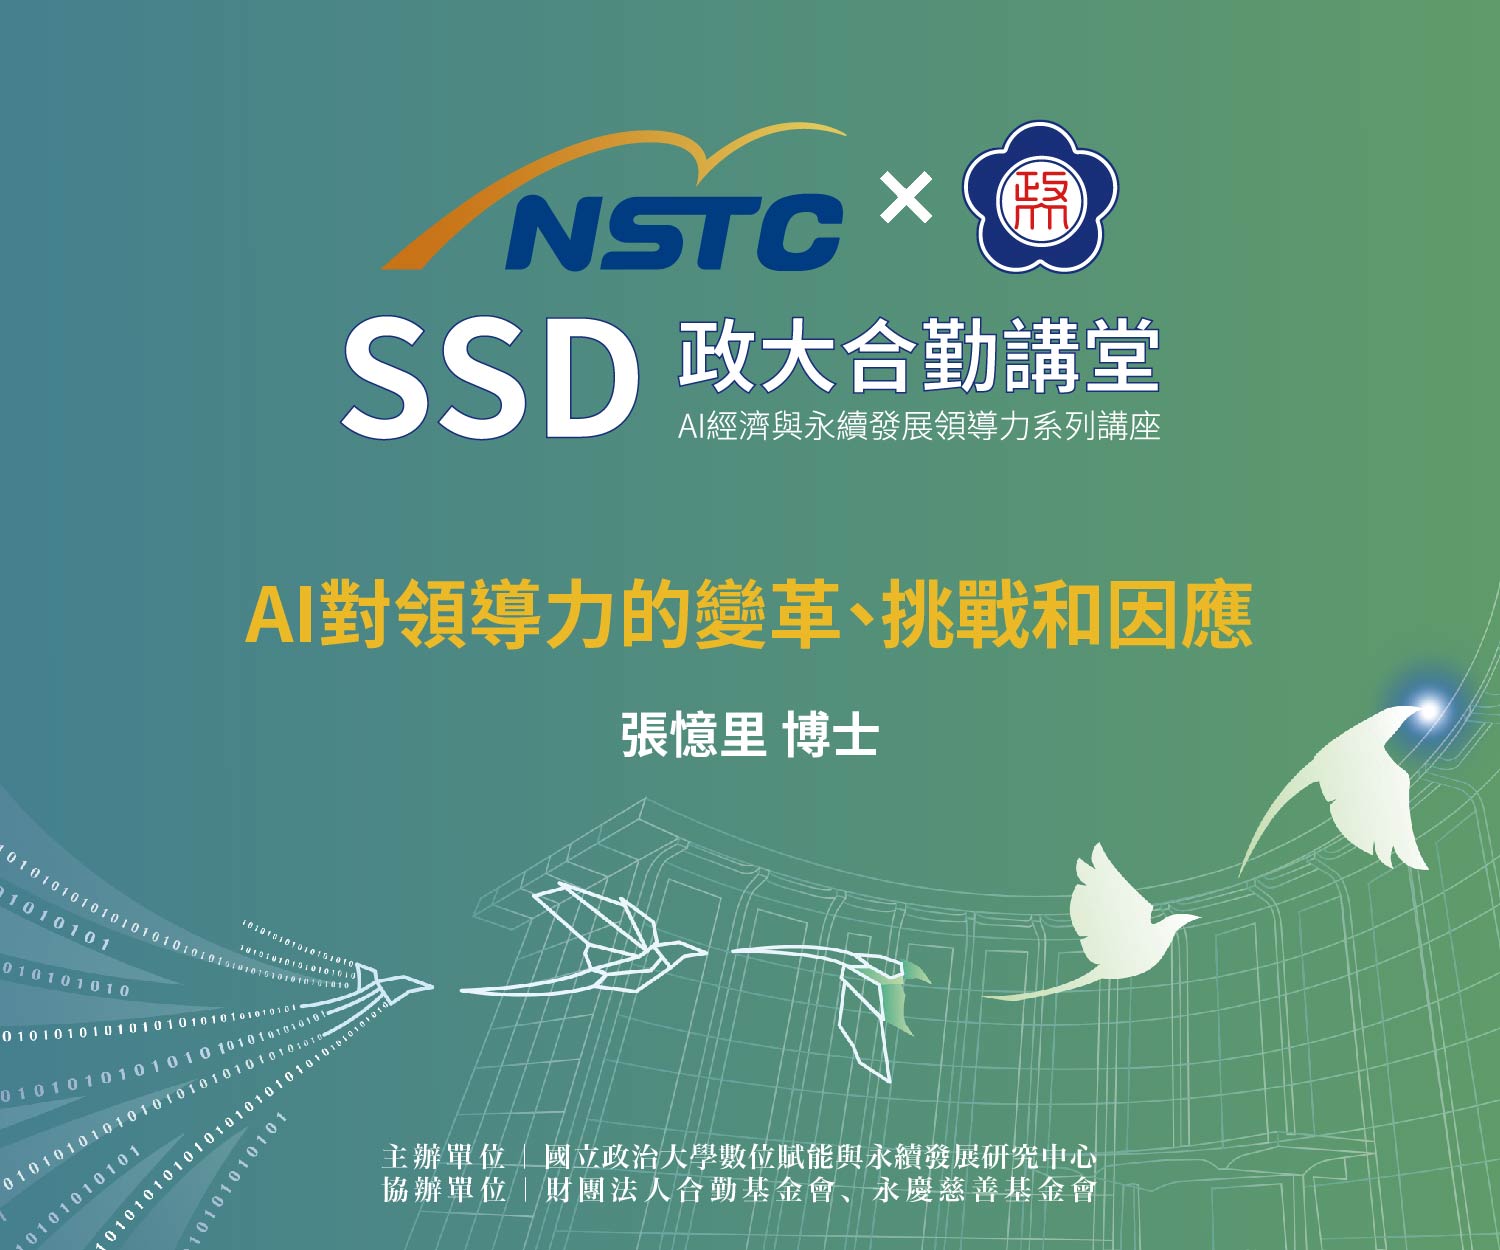 SSD政大合勤講堂｜AI經濟與永續發展領導力系列講座EP02 開放報名中！